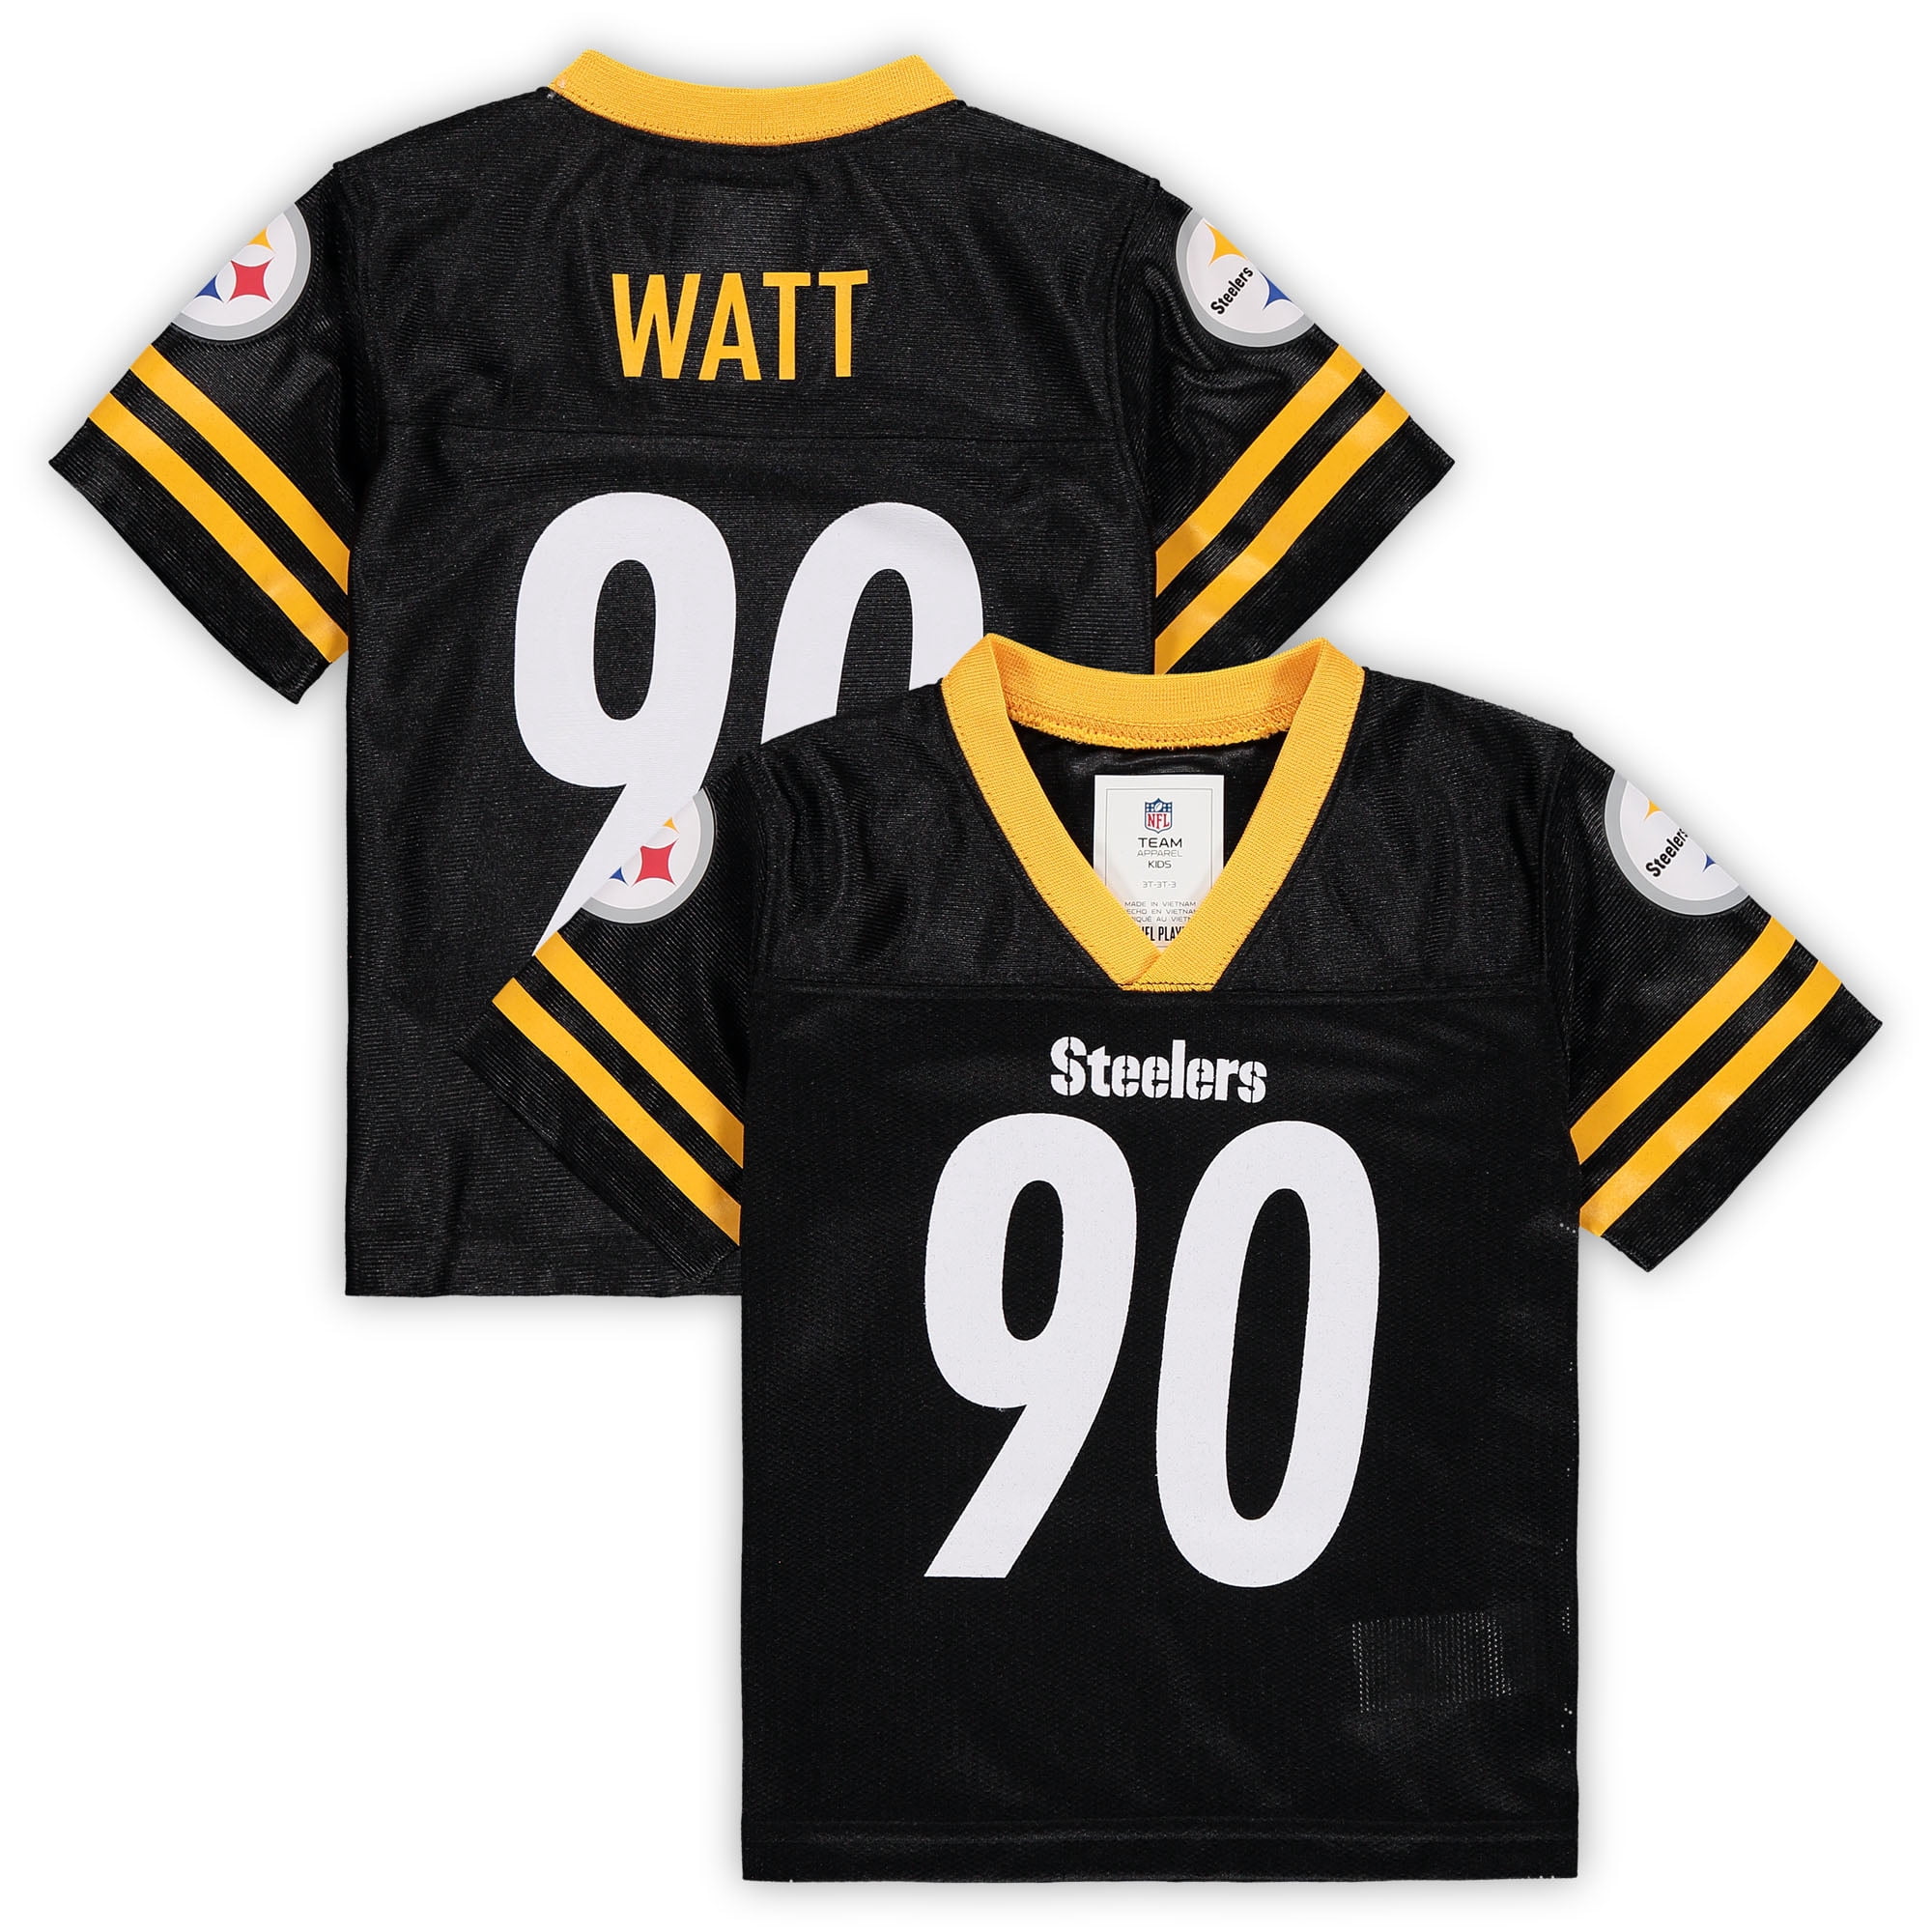 Toddler T.J. Watt Black Pittsburgh Steelers Replica Player Jersey 